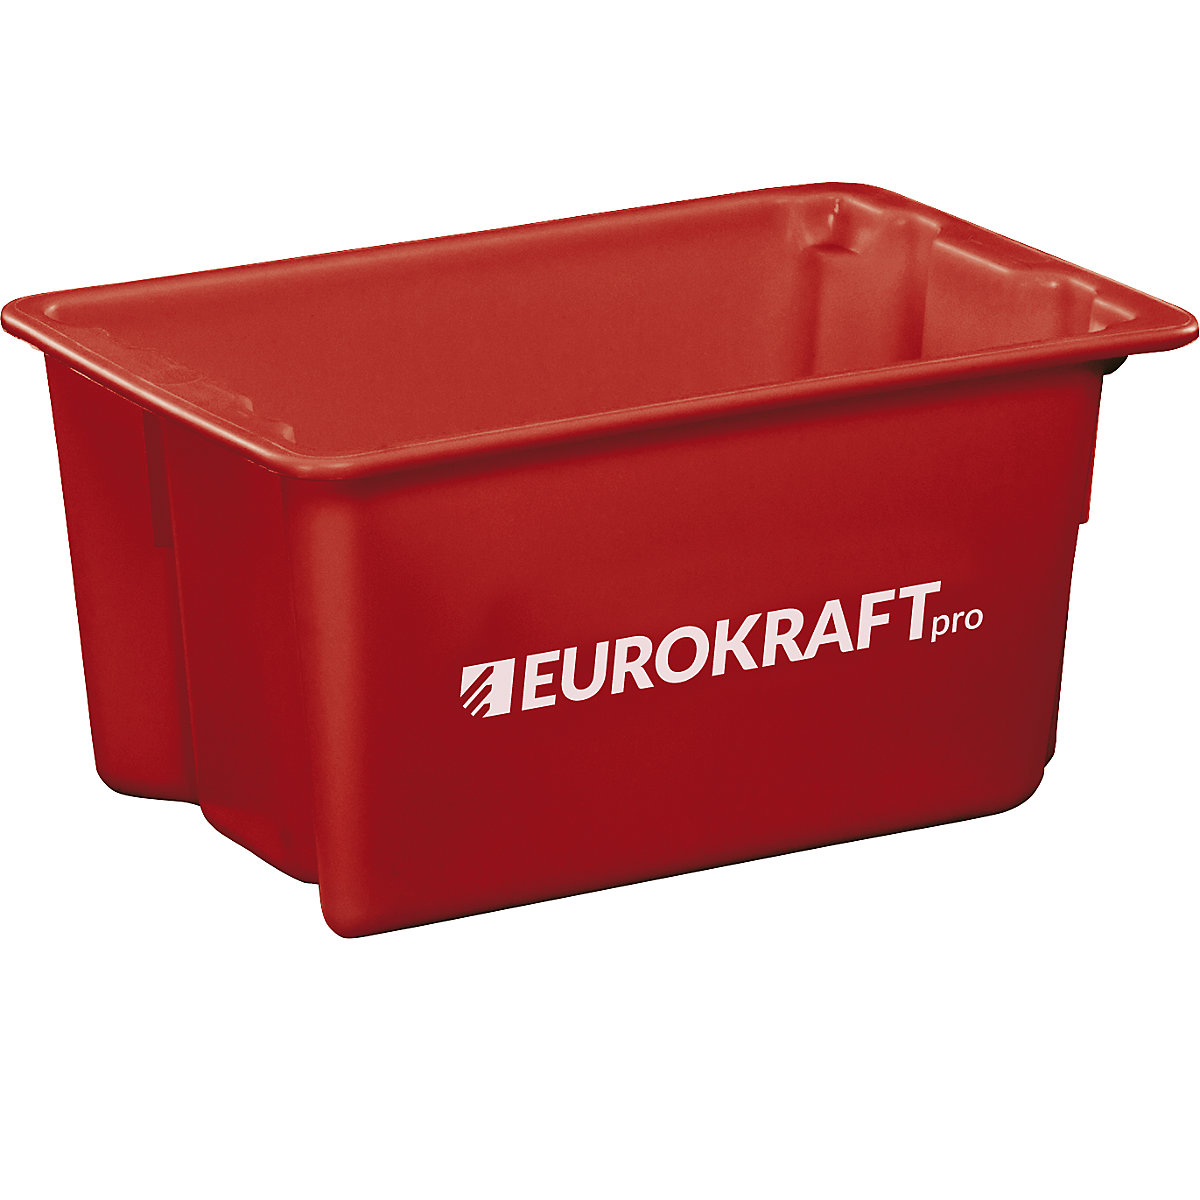 Stack/nest container made of polypropylene suitable for foodstuffs - eurokraft pro